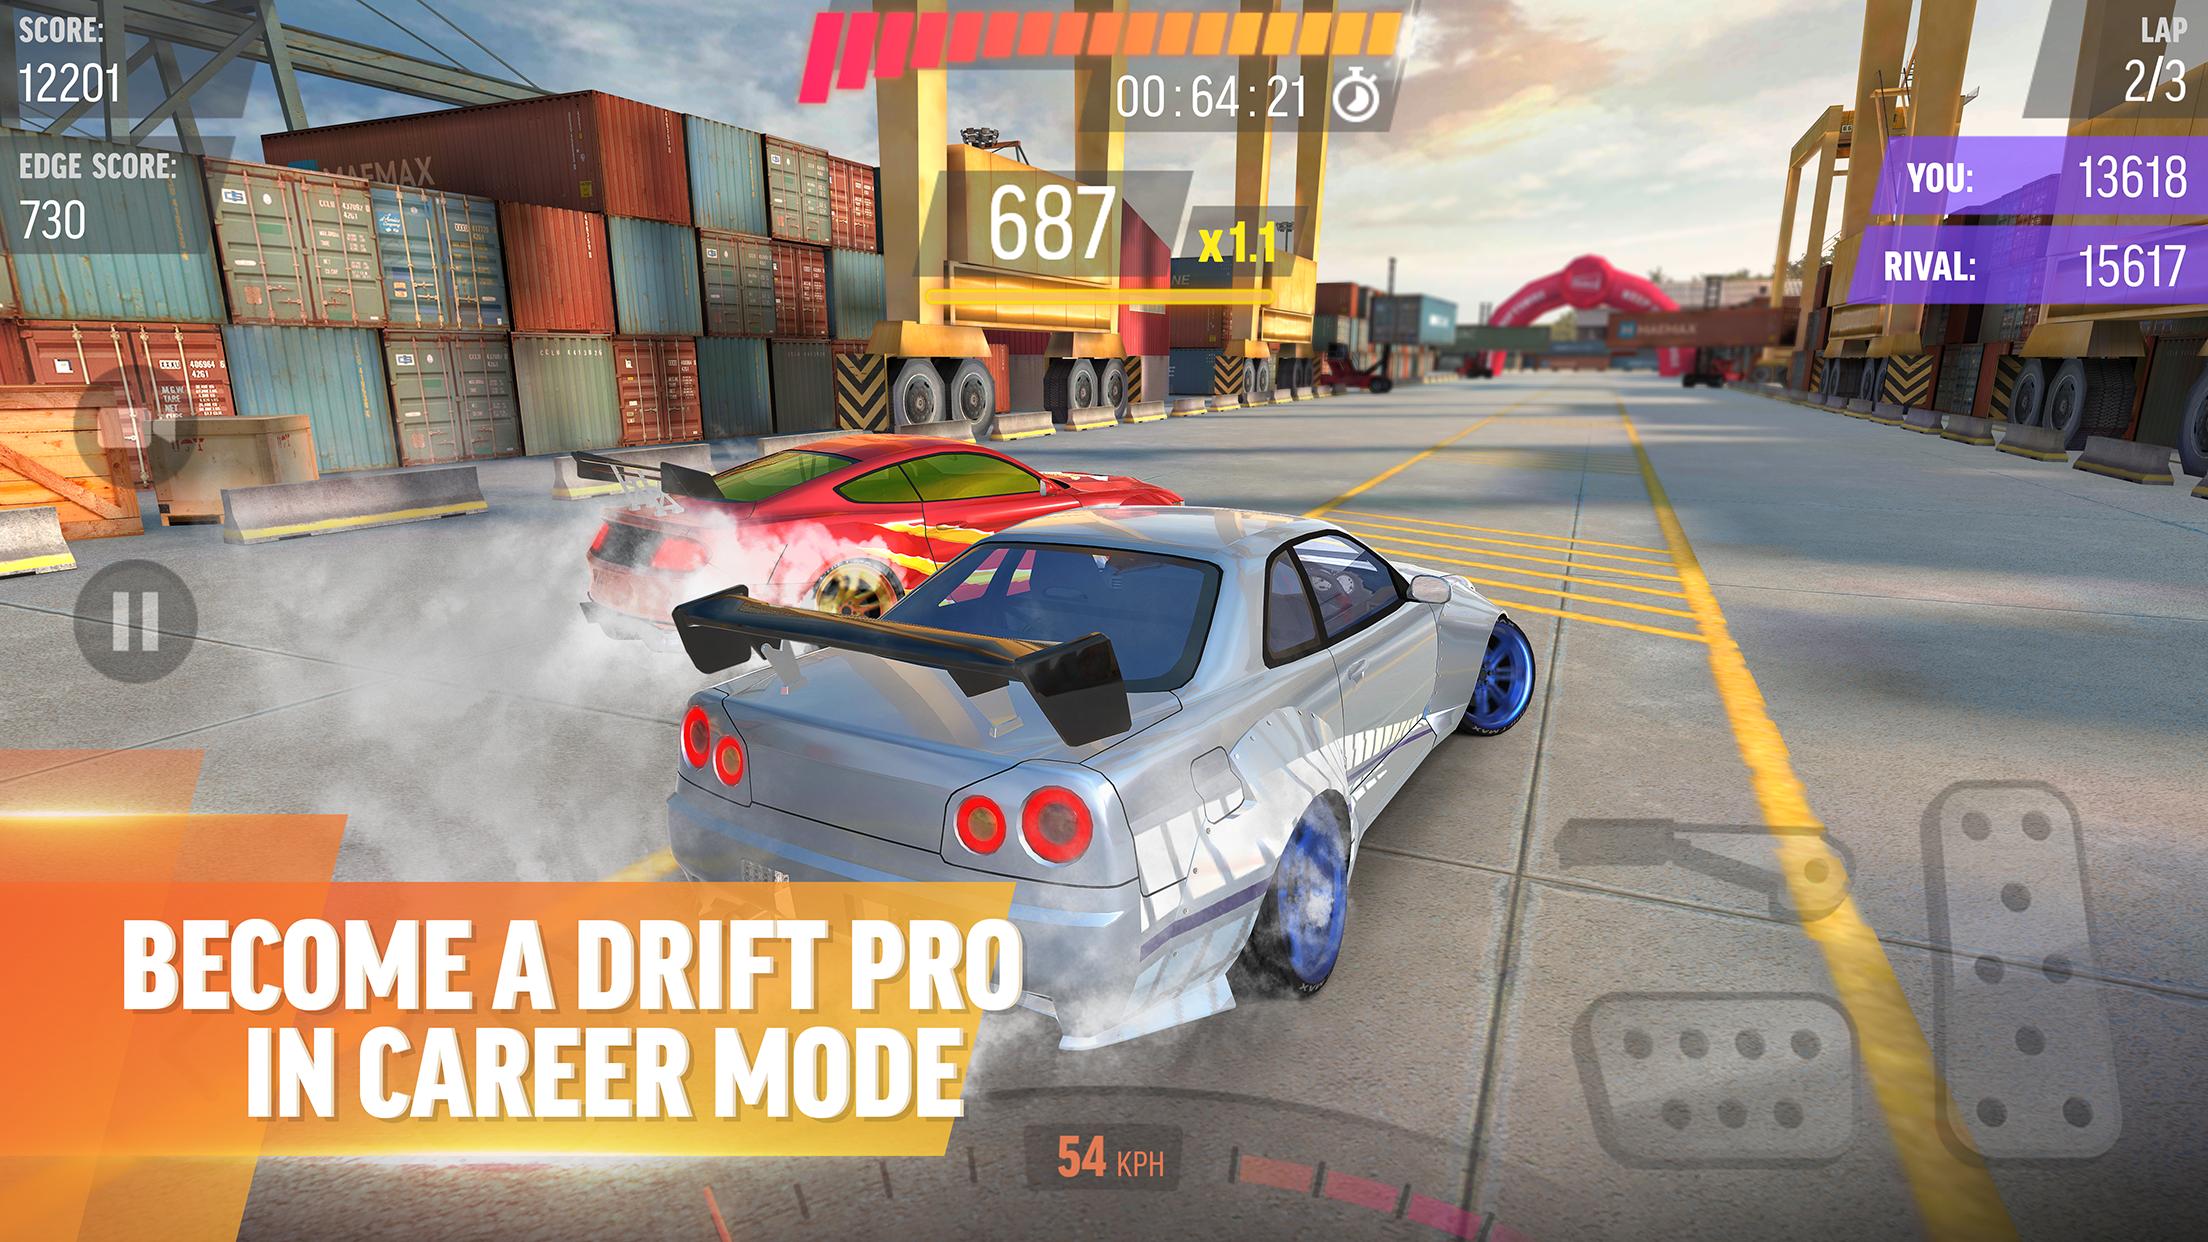 Drift Max Pro Car Drifting Game with Racing Cars 2.4.60 Screenshot 12